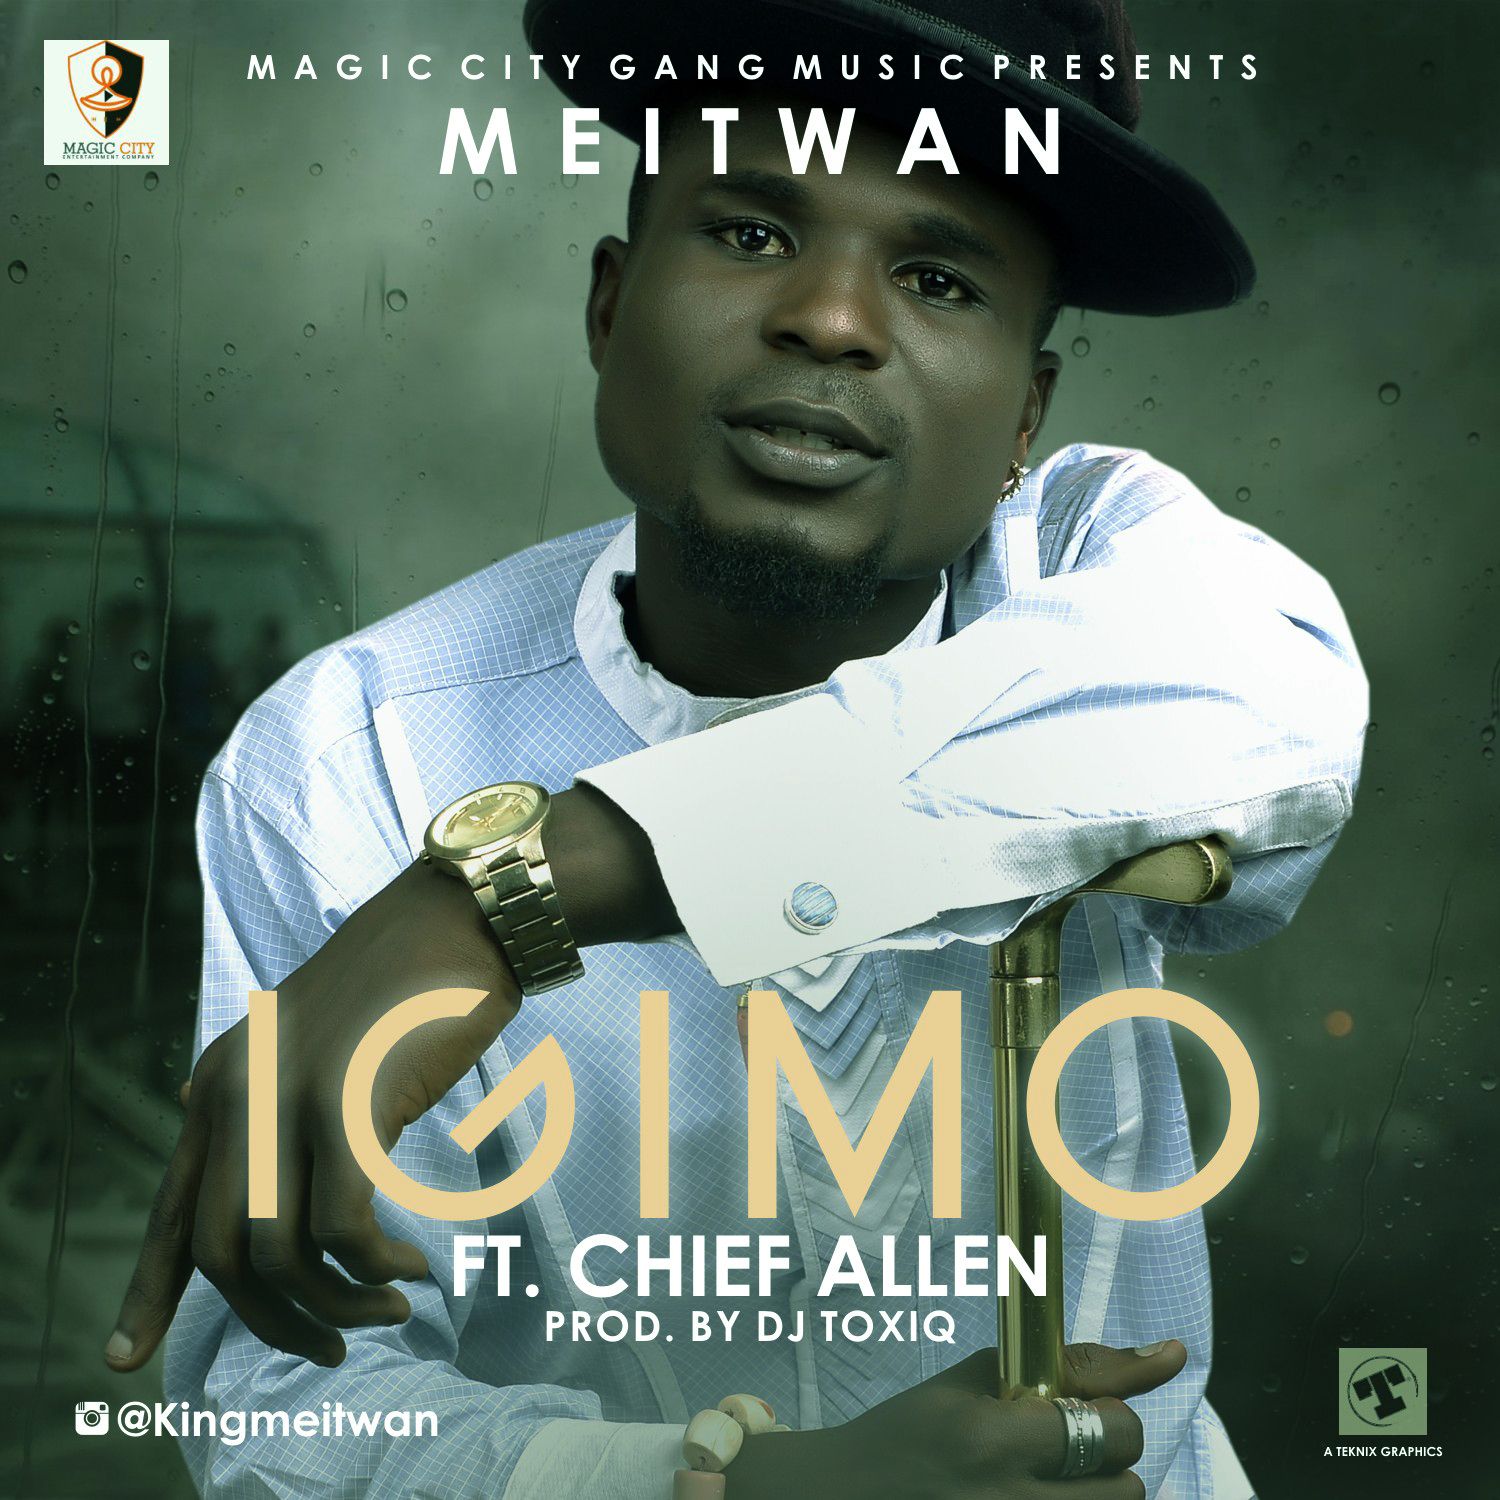 Meitwan ft. Chief Allen - IGIMO (prod. by DJ Toxiq) Artwork | AceWorlTeam.com